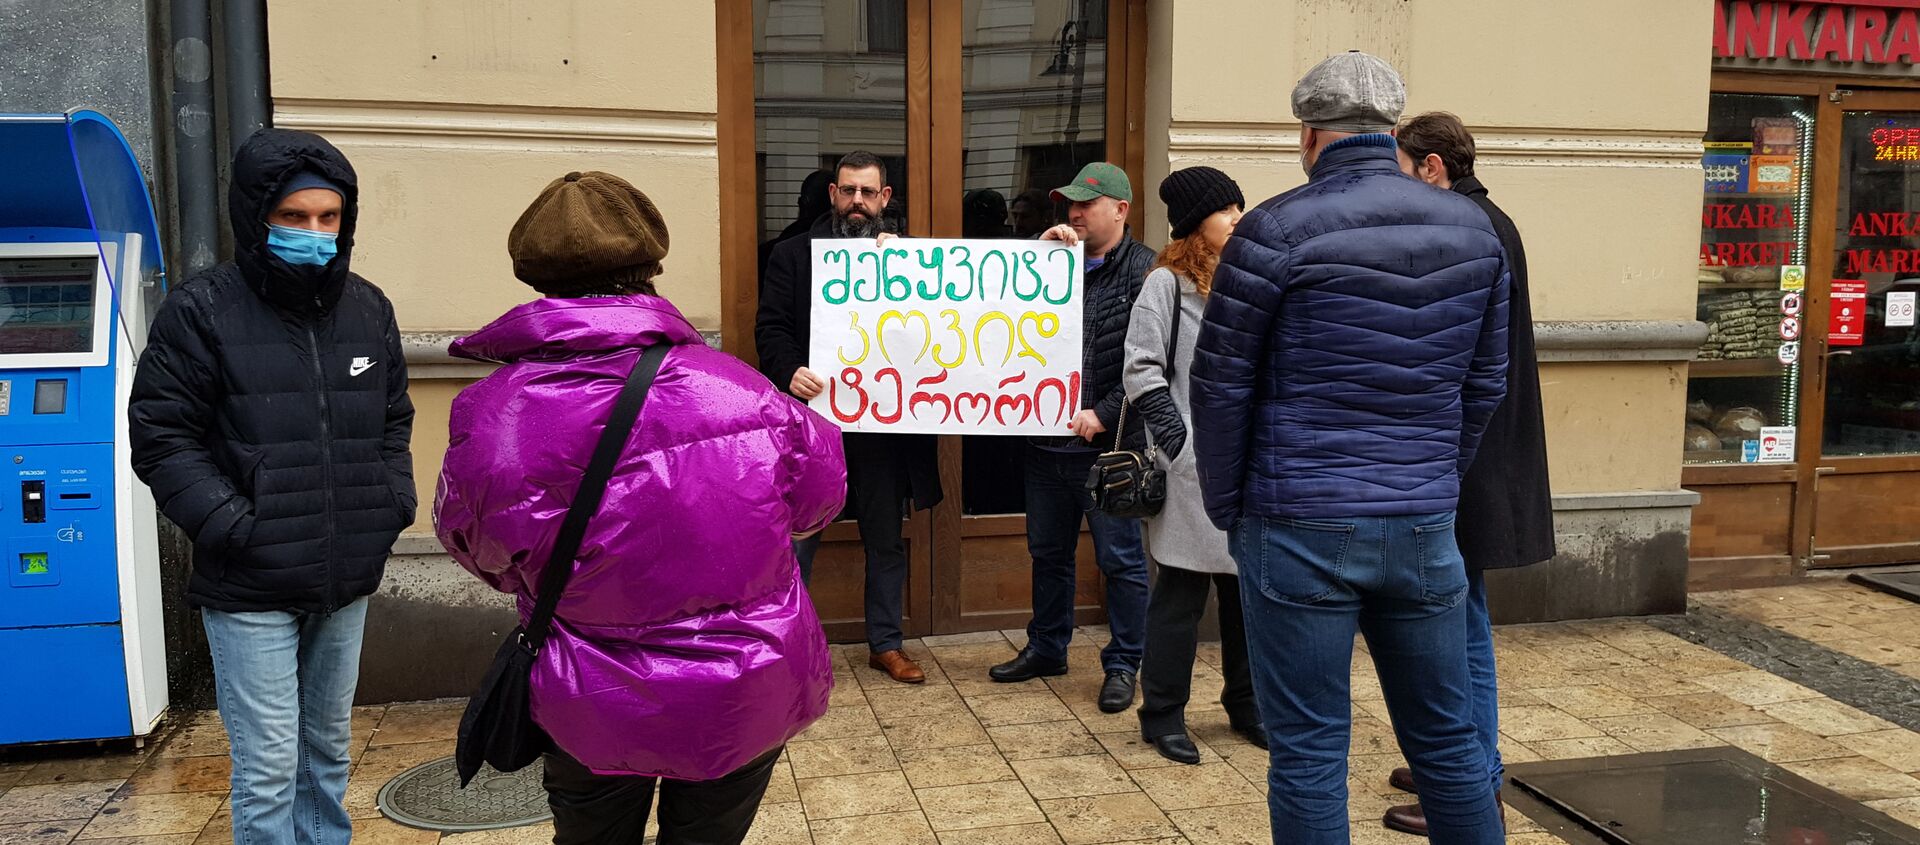 Акция протеста под лозунгом Прекратите ковид-террор на проспекте Агмашенебели  16 февраля 2021 года - Sputnik Грузия, 1920, 16.02.2021